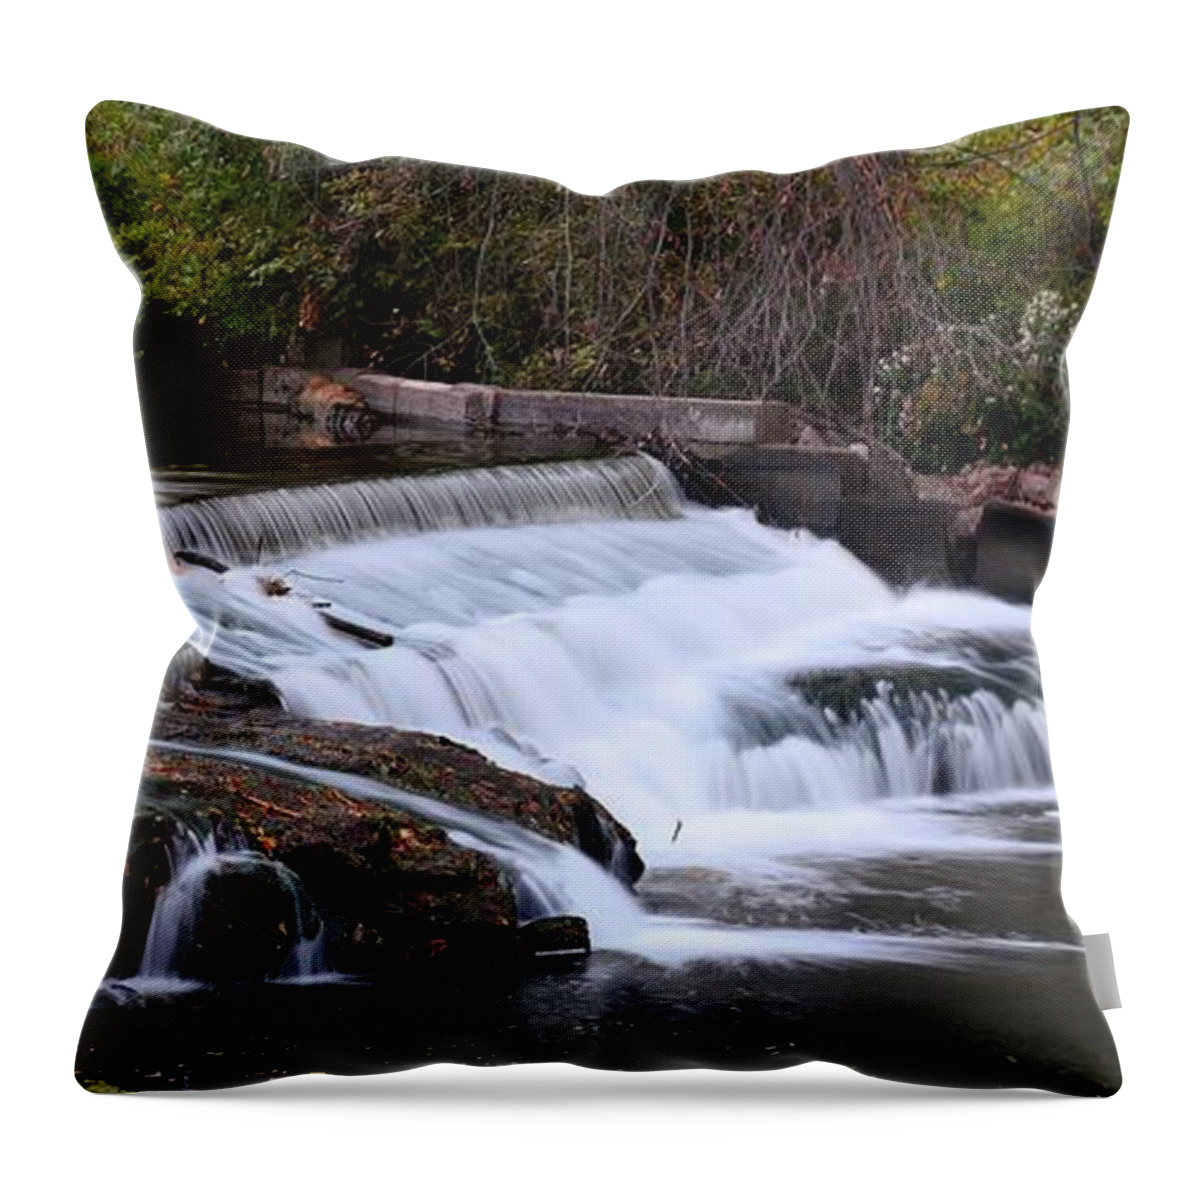 Dam Throw Pillow featuring the photograph Spring Creek Dam by Bonfire Photography